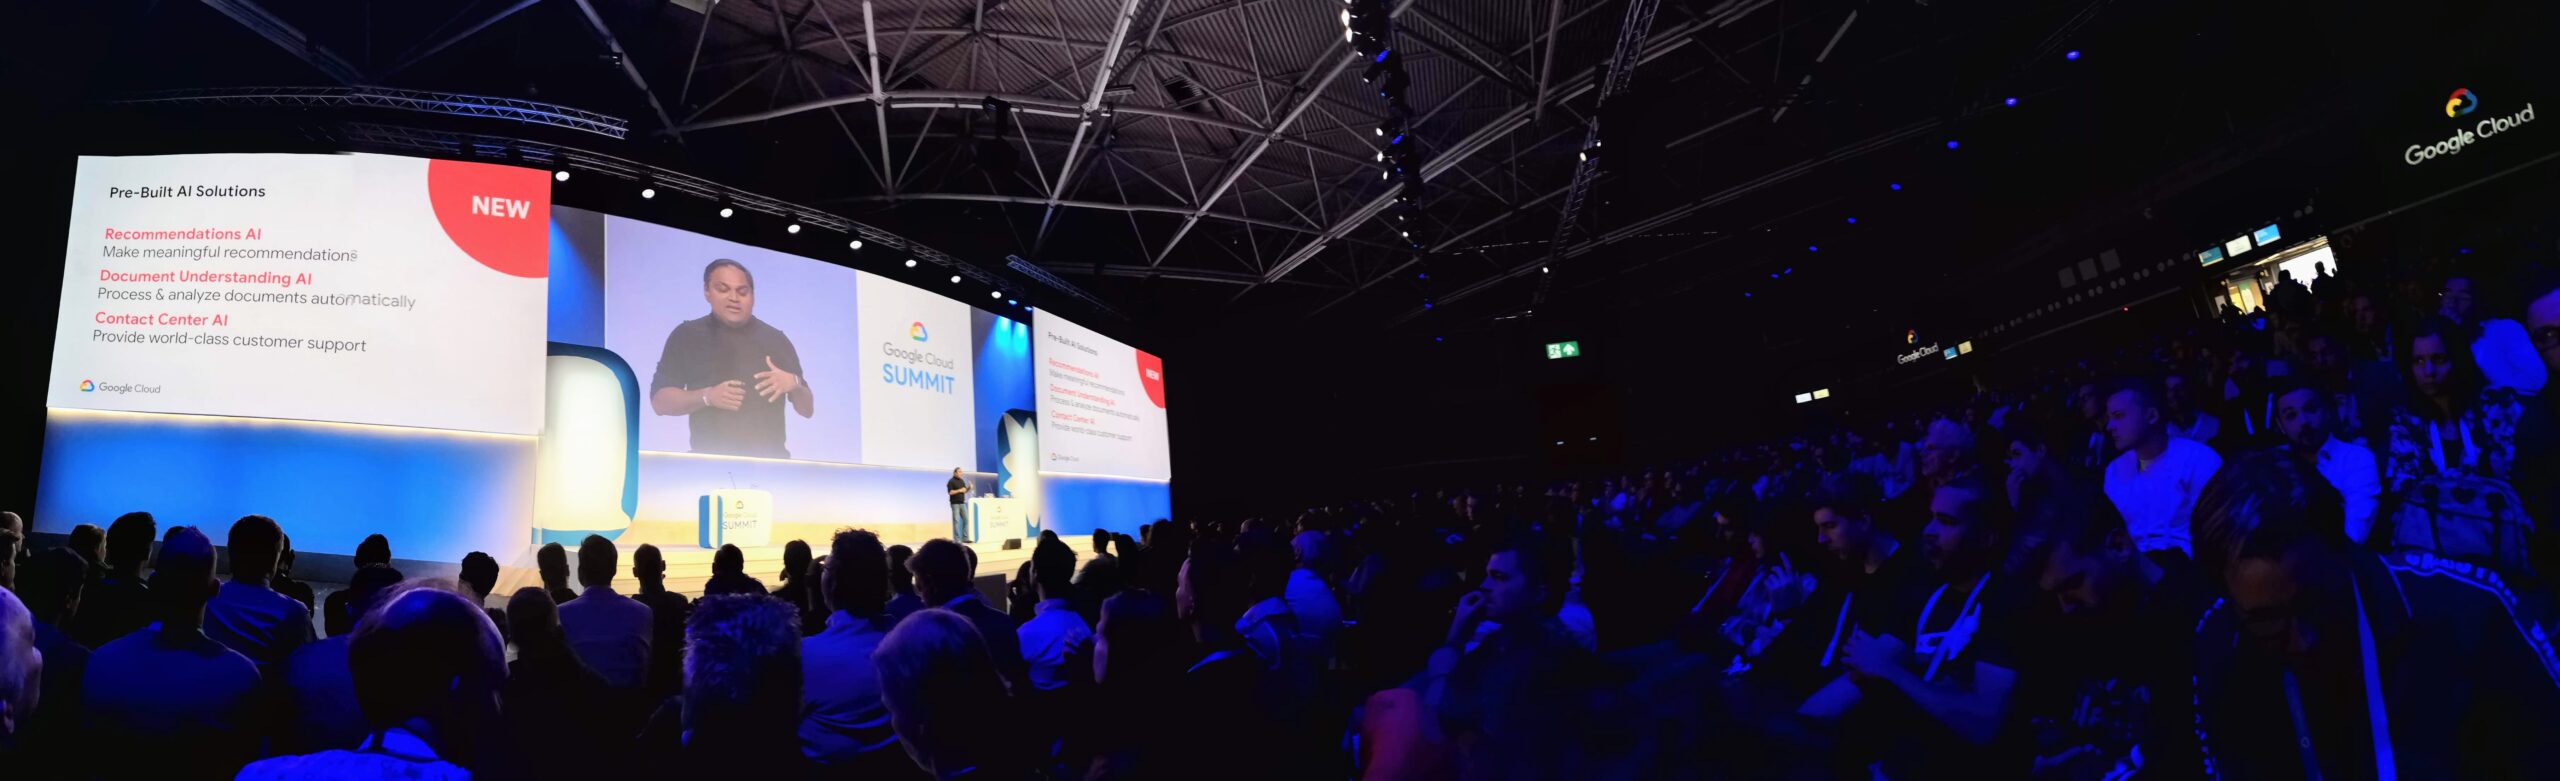 Google Cloud Summit Amsterdam 2019 Keynote